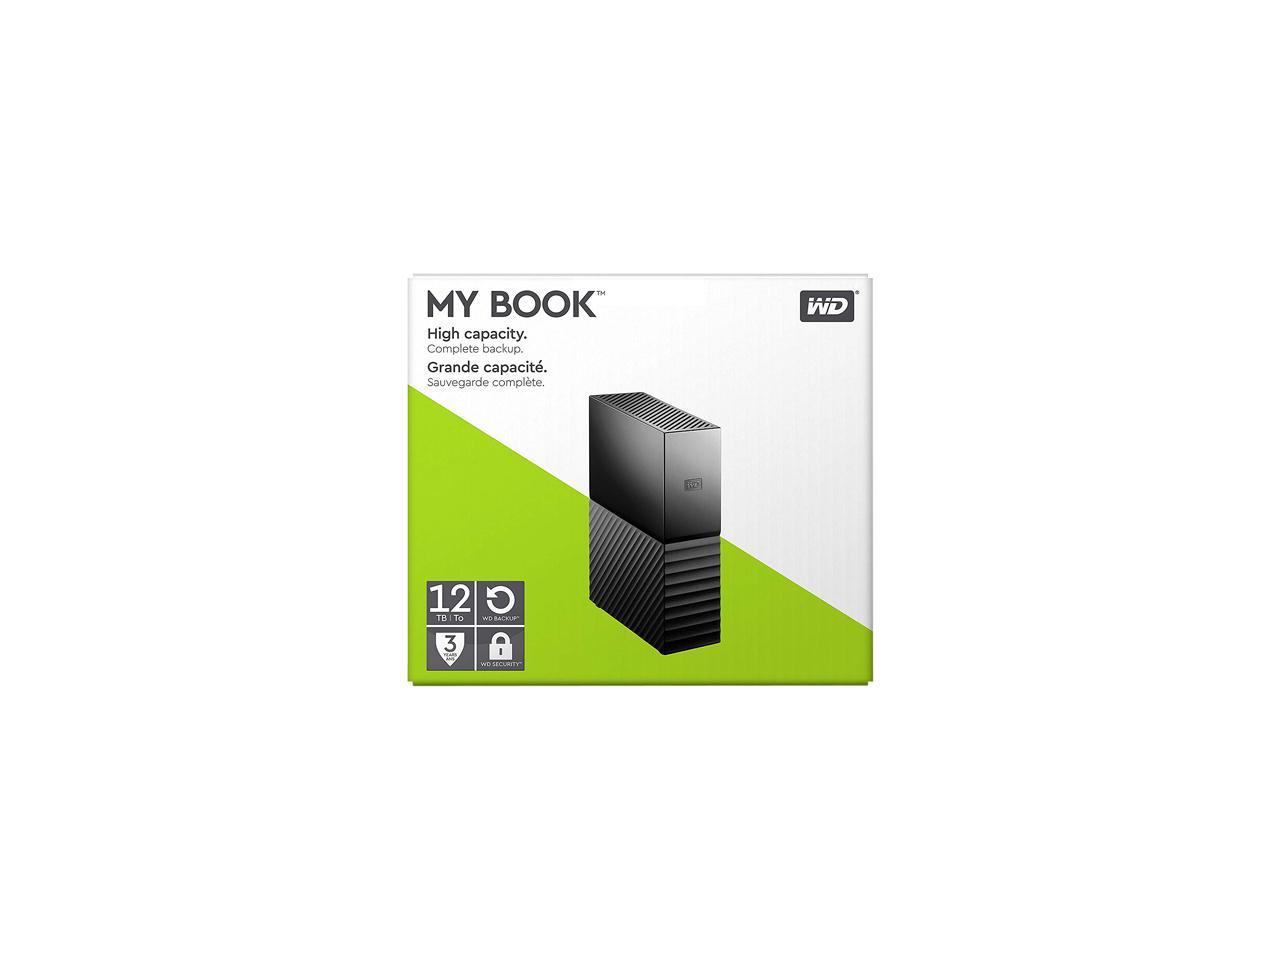 Wd My Book 12Tb Desktop External Hard Drive For Windows/Mac/Laptop, Usb 3.0 Black (Wdbbgb0120Hbk-Nesn)